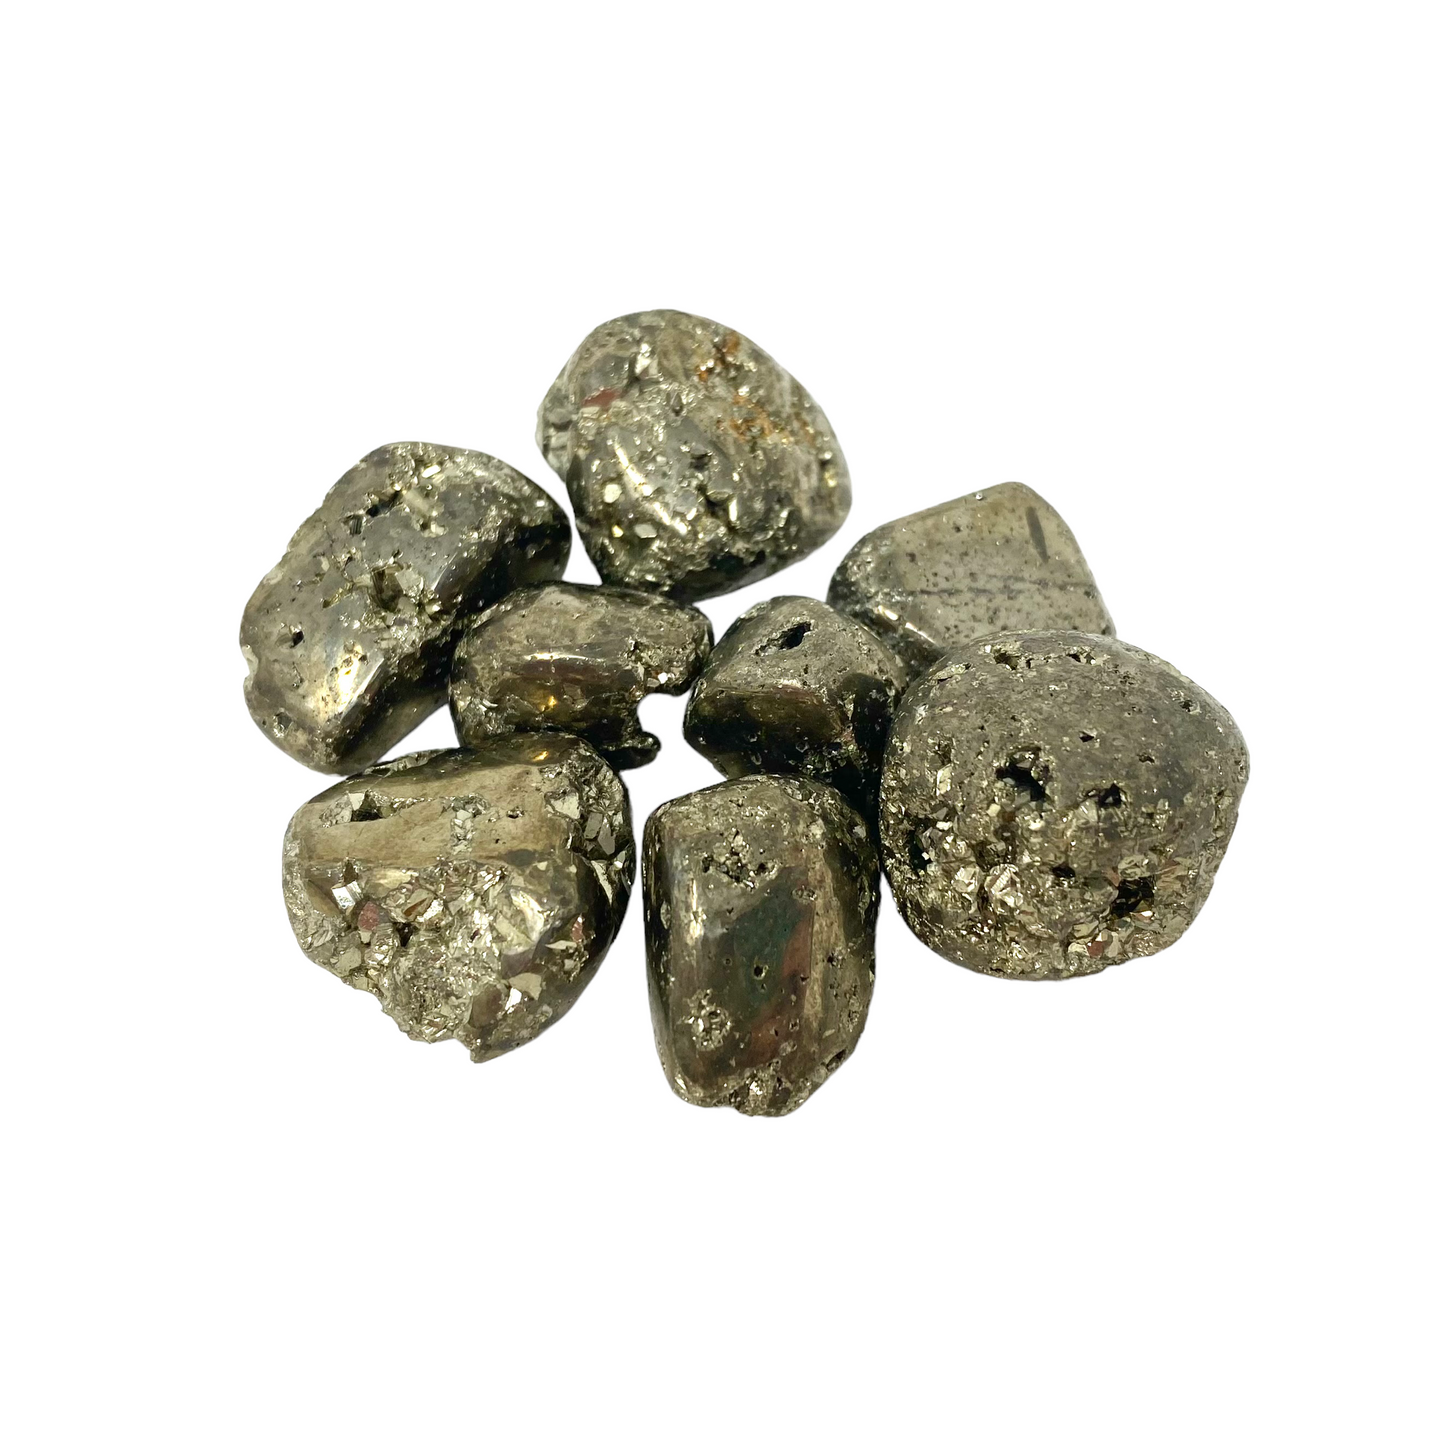 Polished Pyrite Tumble Stone